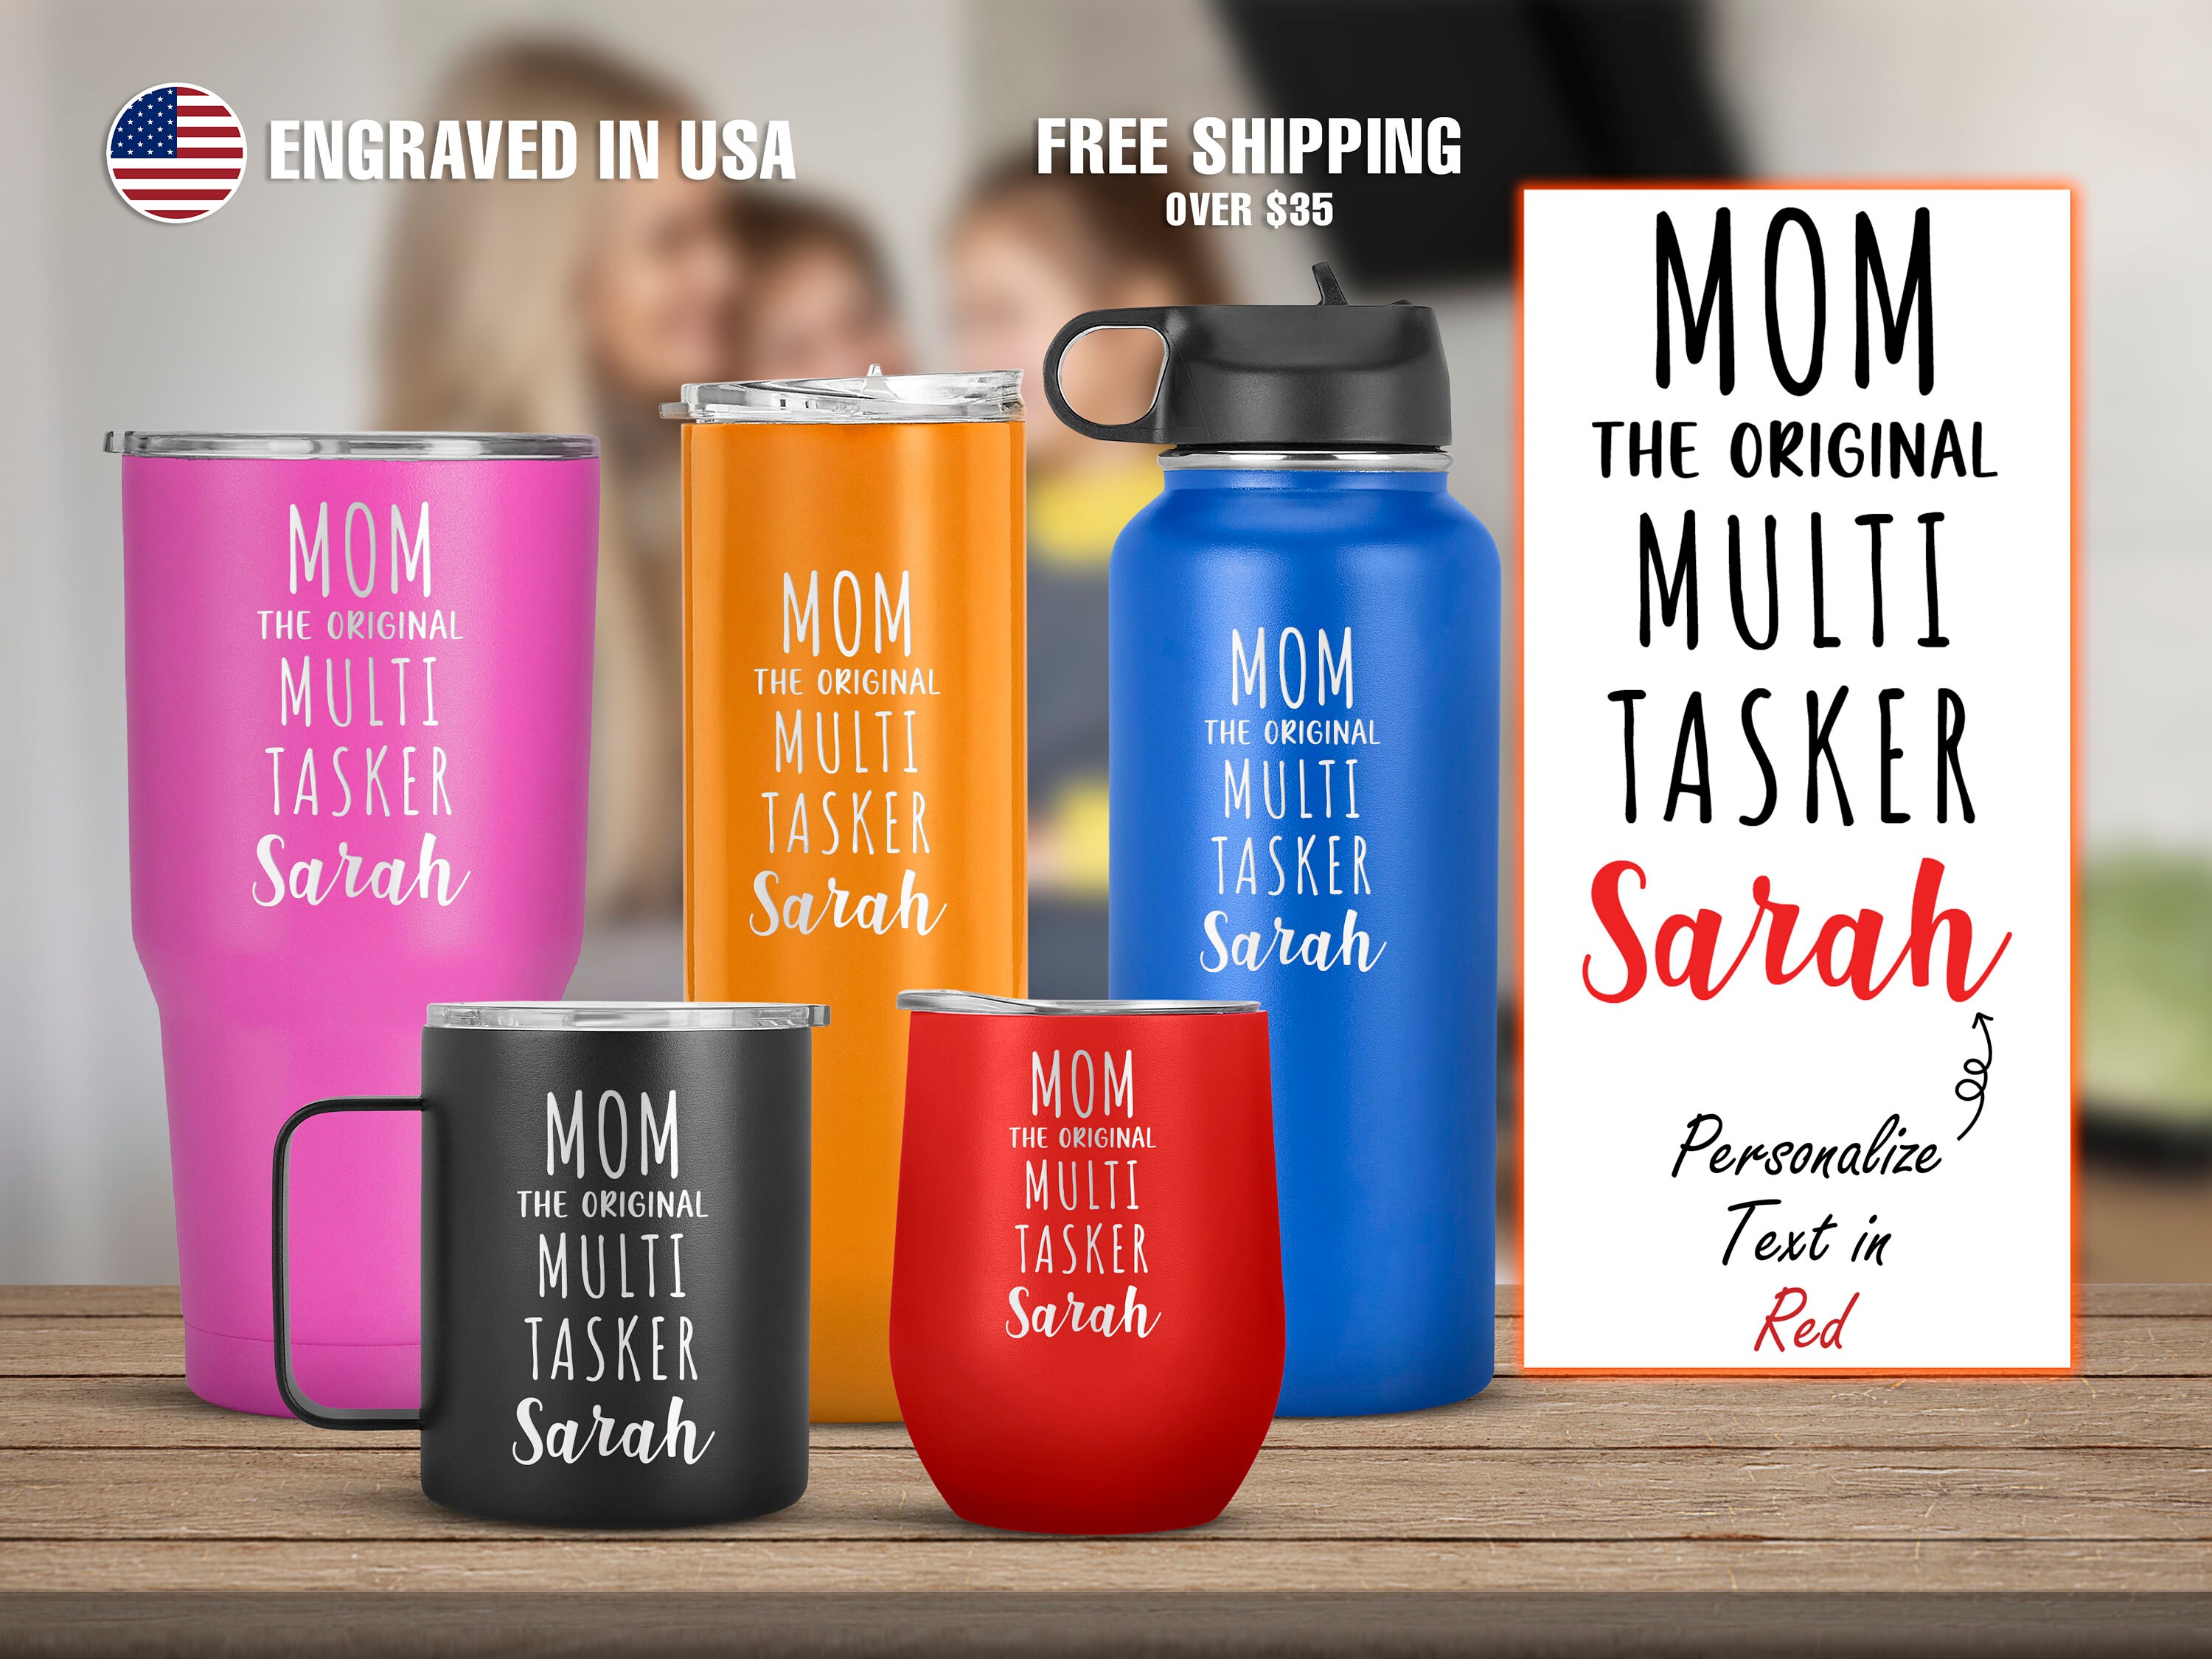 Buy Mom Original Multi Tasker Personalized Engraved Tumbler Online India - Etsy